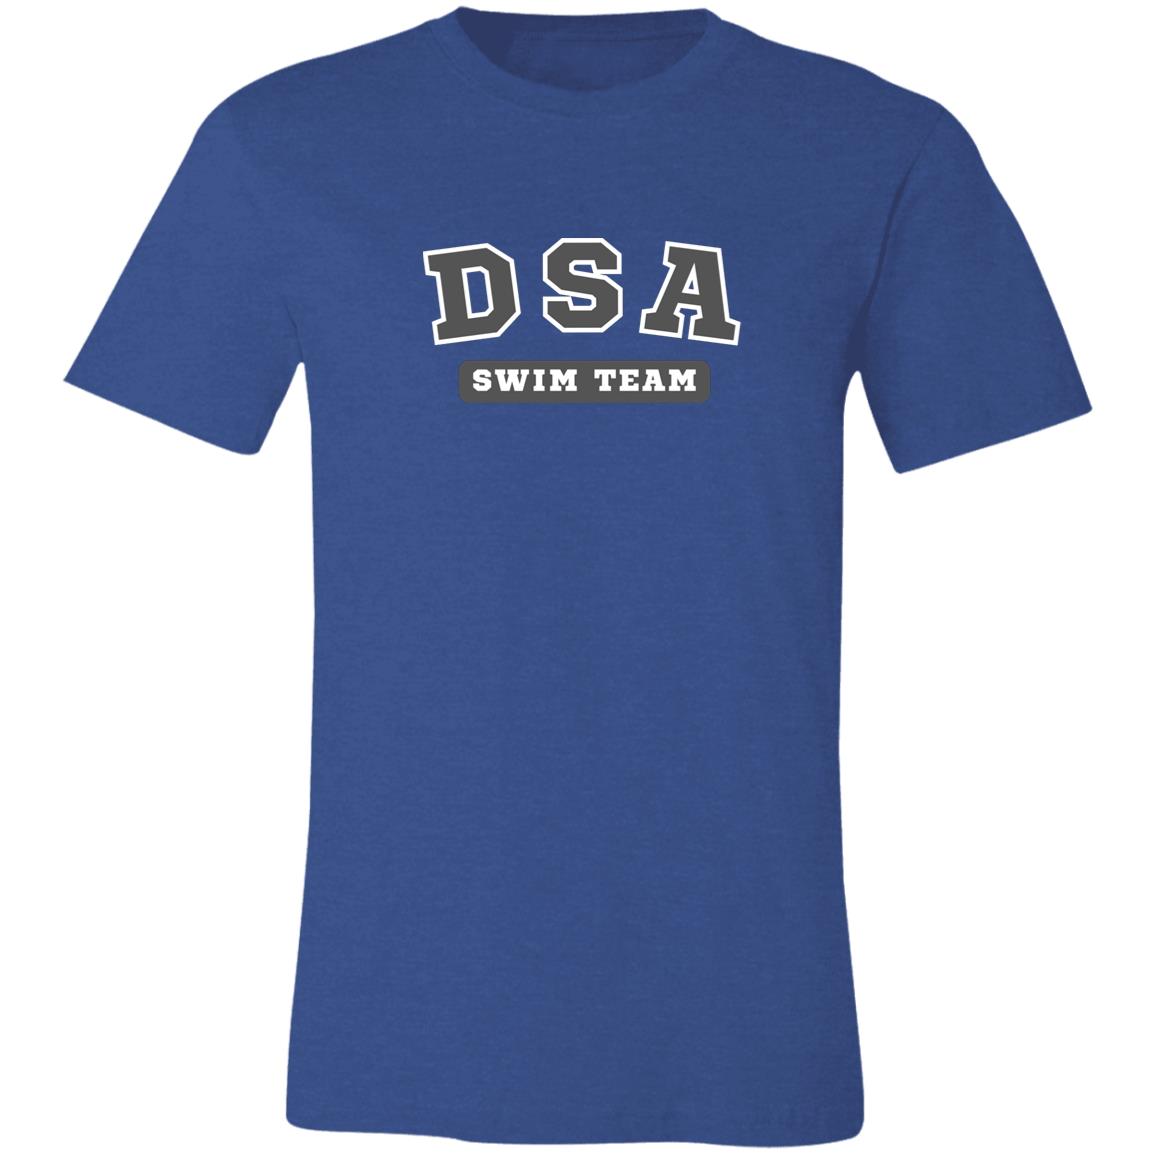 DSA Swim Team- The Comfy